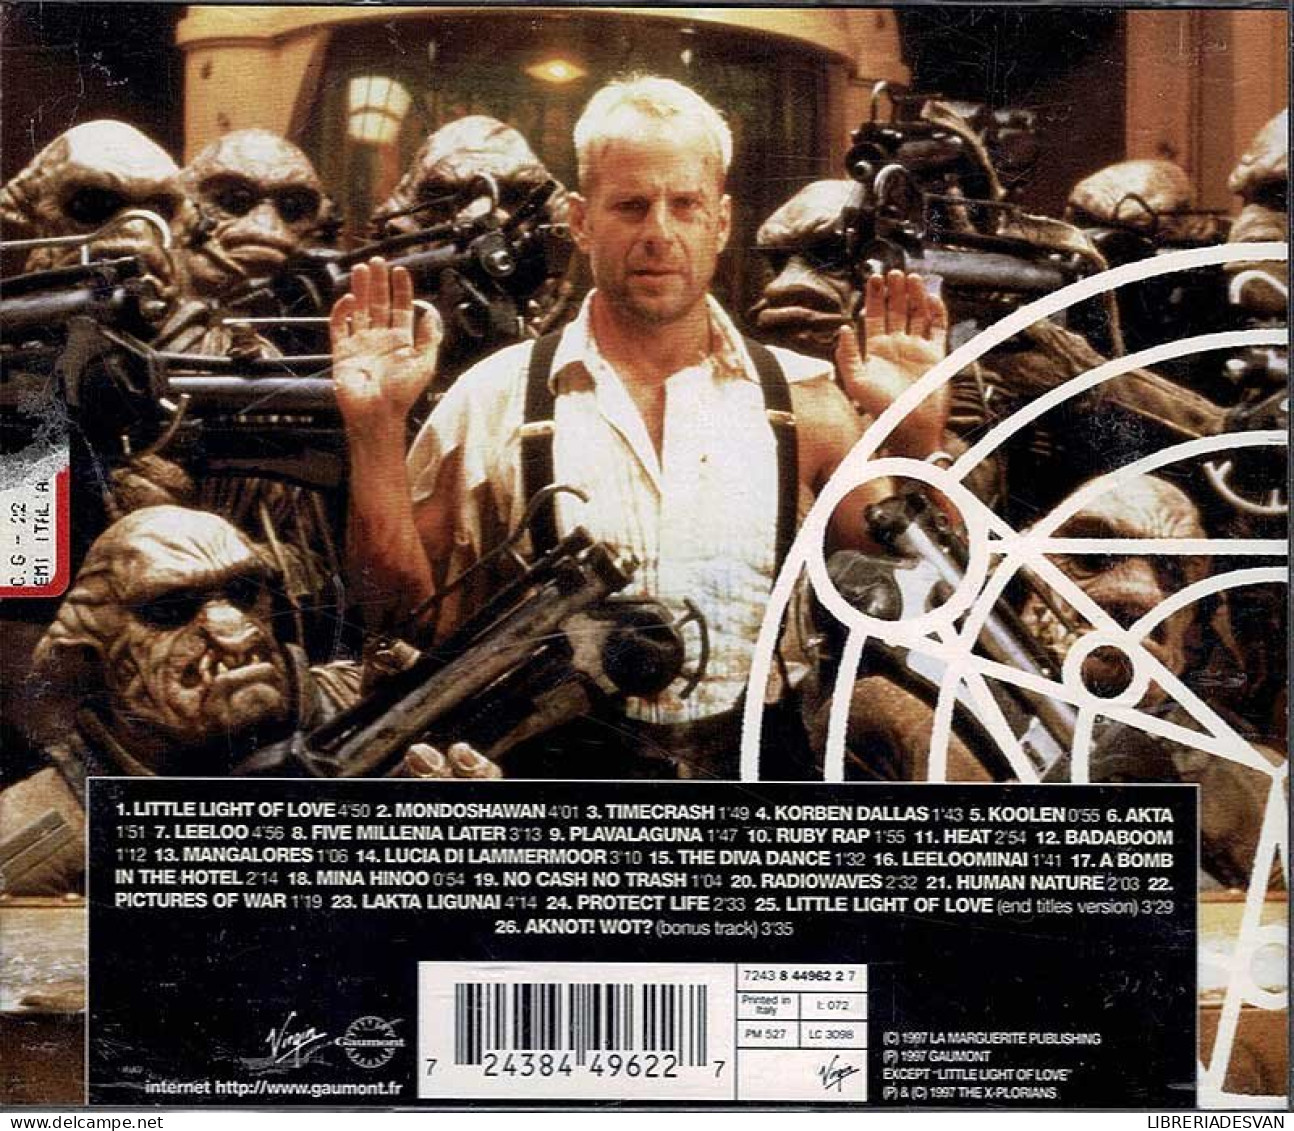 Eric Serra - The Fifth Element (Original Motion Picture Soundtrack). CD - Soundtracks, Film Music